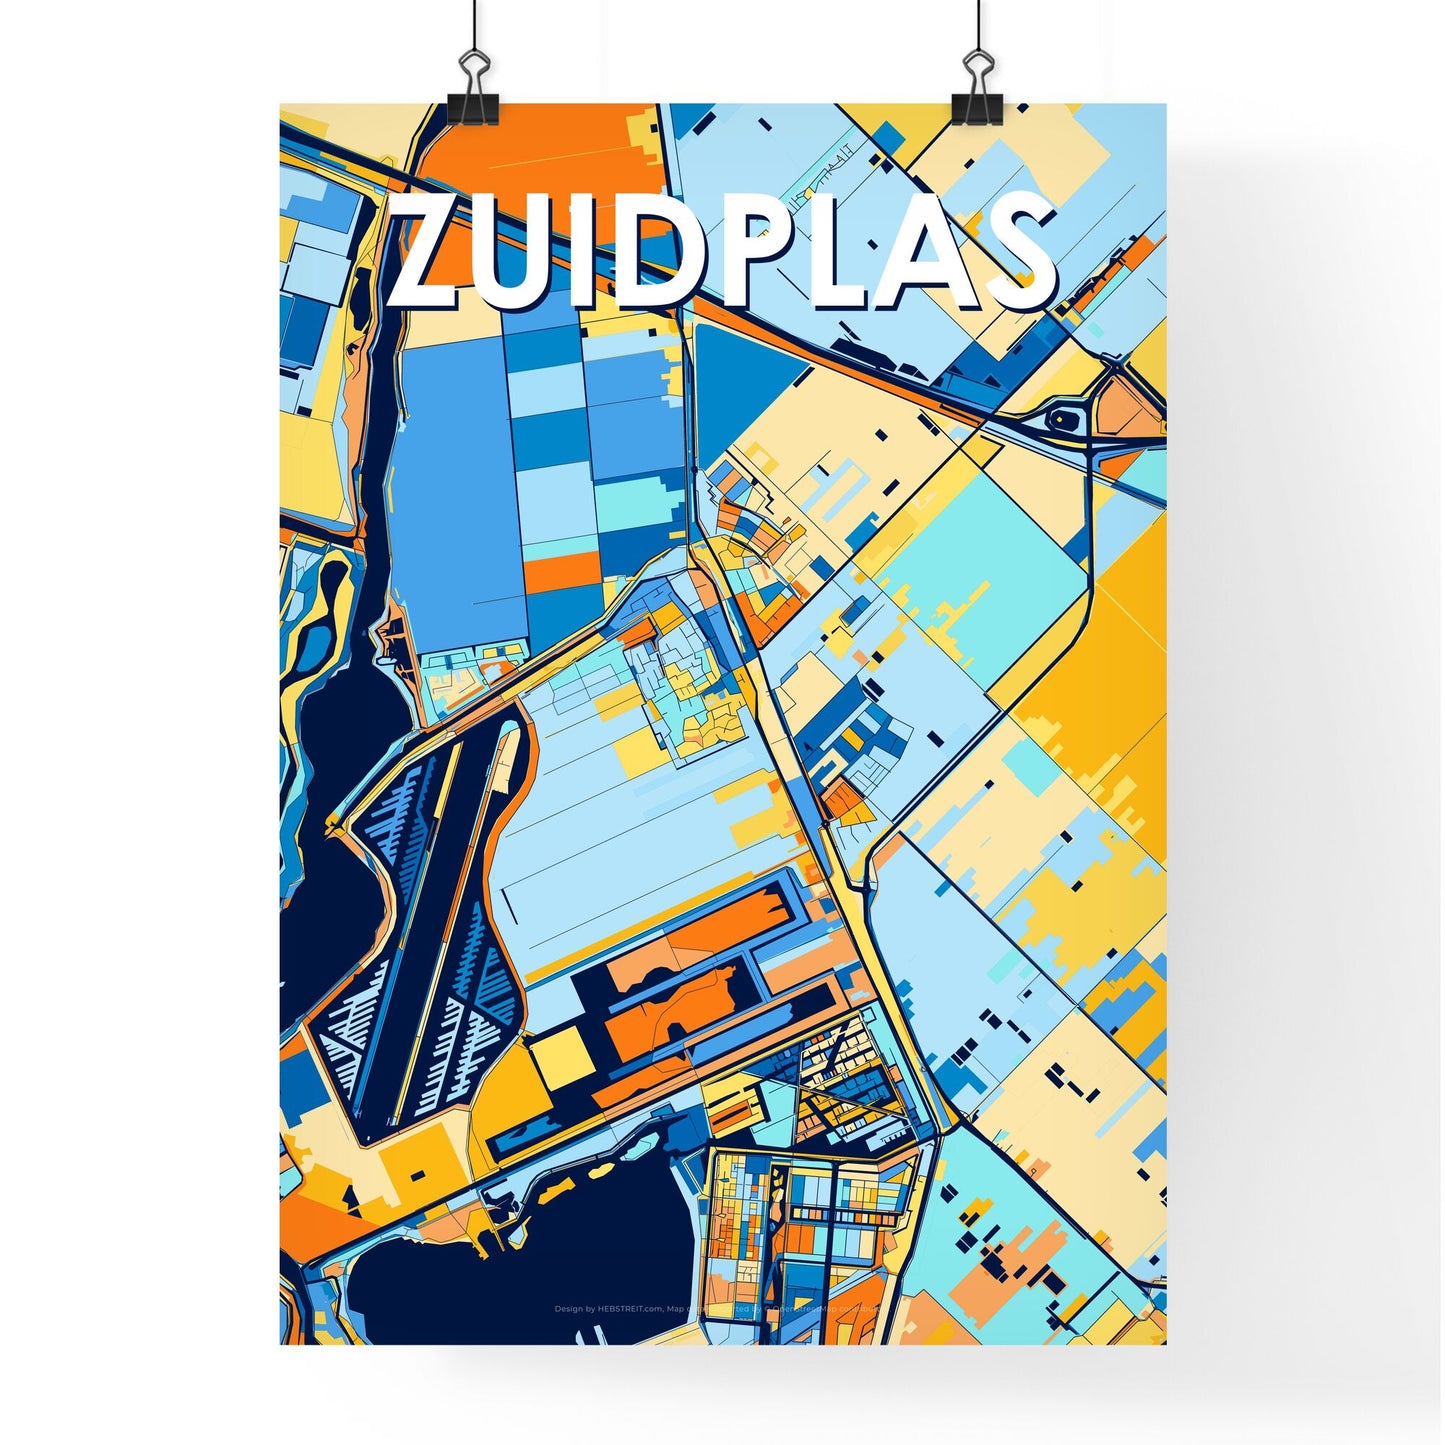 ZUIDPLAS NETHERLANDS Vibrant Colorful Art Map Poster Blue Orange